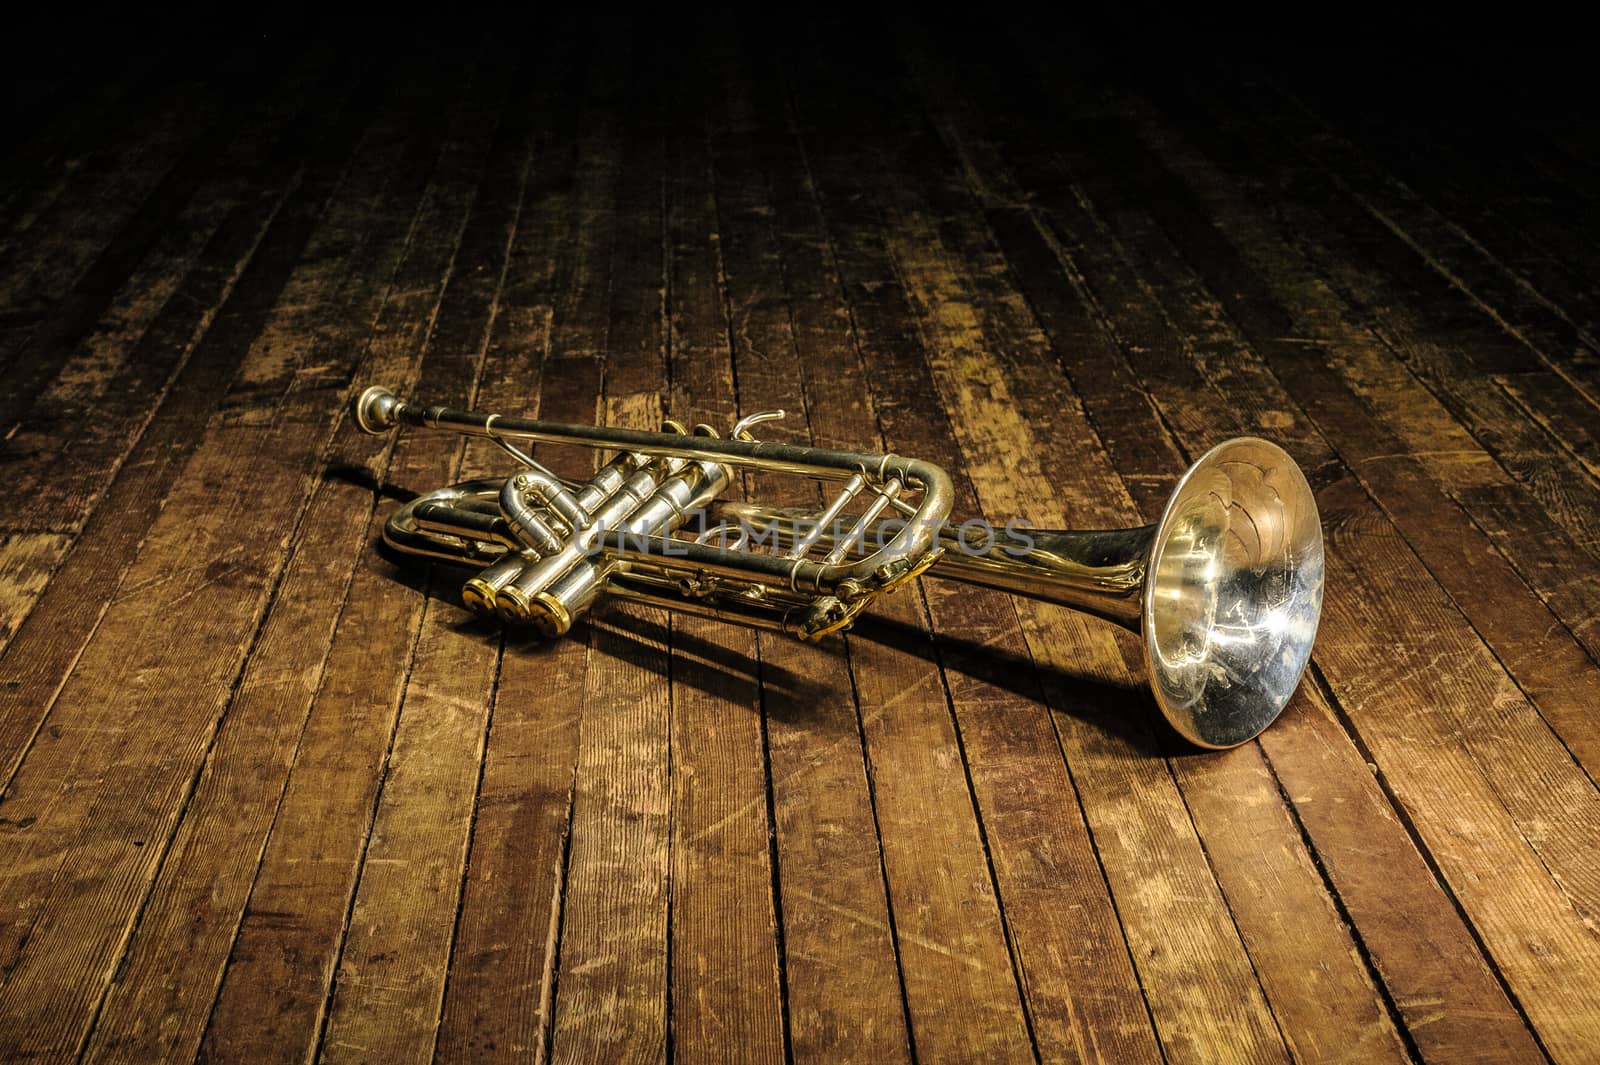 white brass trumpet lies on a wooden stage